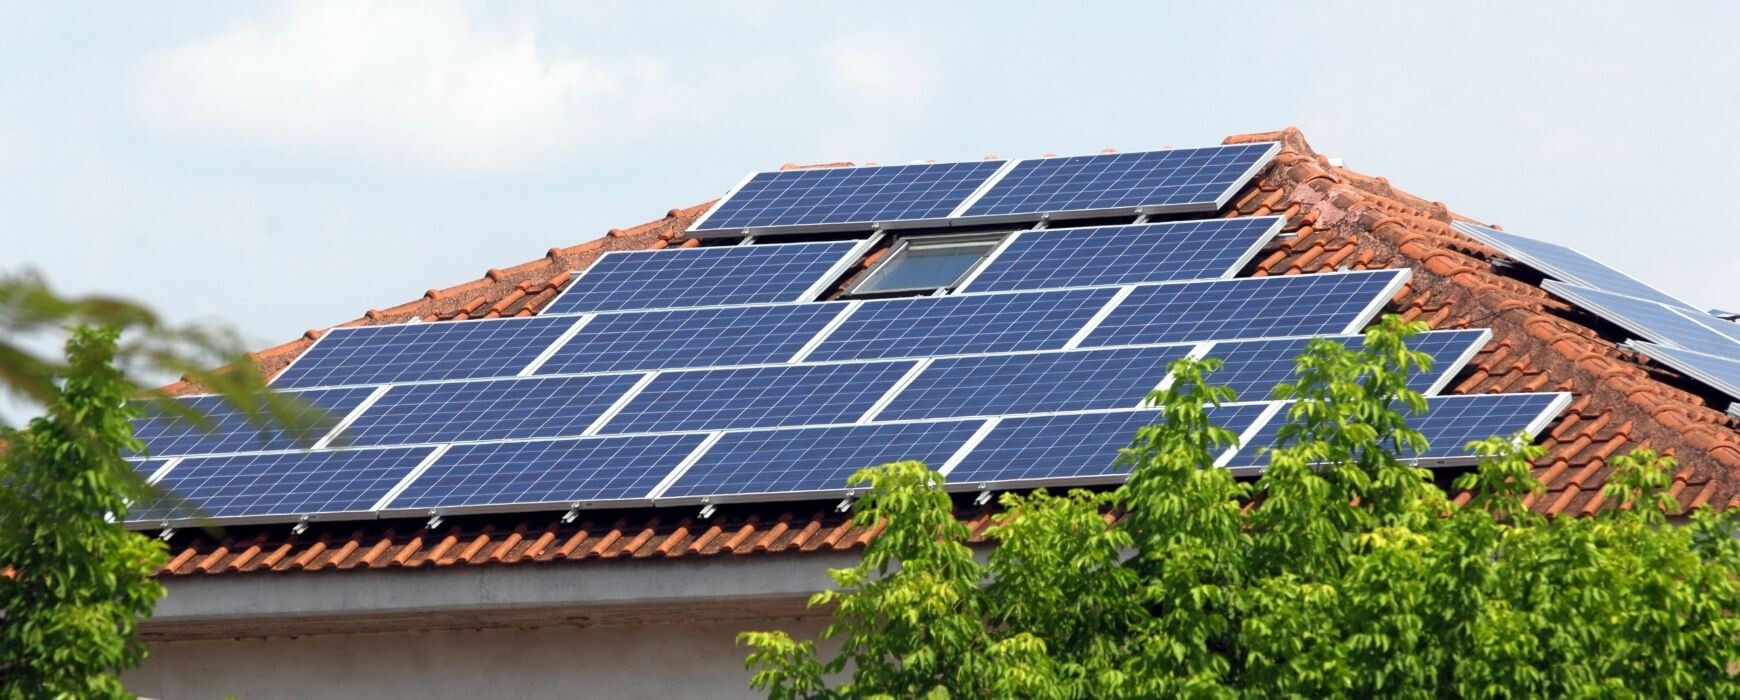 More information about "Πρόγραμμα «Φωτοβολταϊκά στις στέγες»: Μια επένδυση με όριο 20ετίας και ισχύ ως 6 kWp"